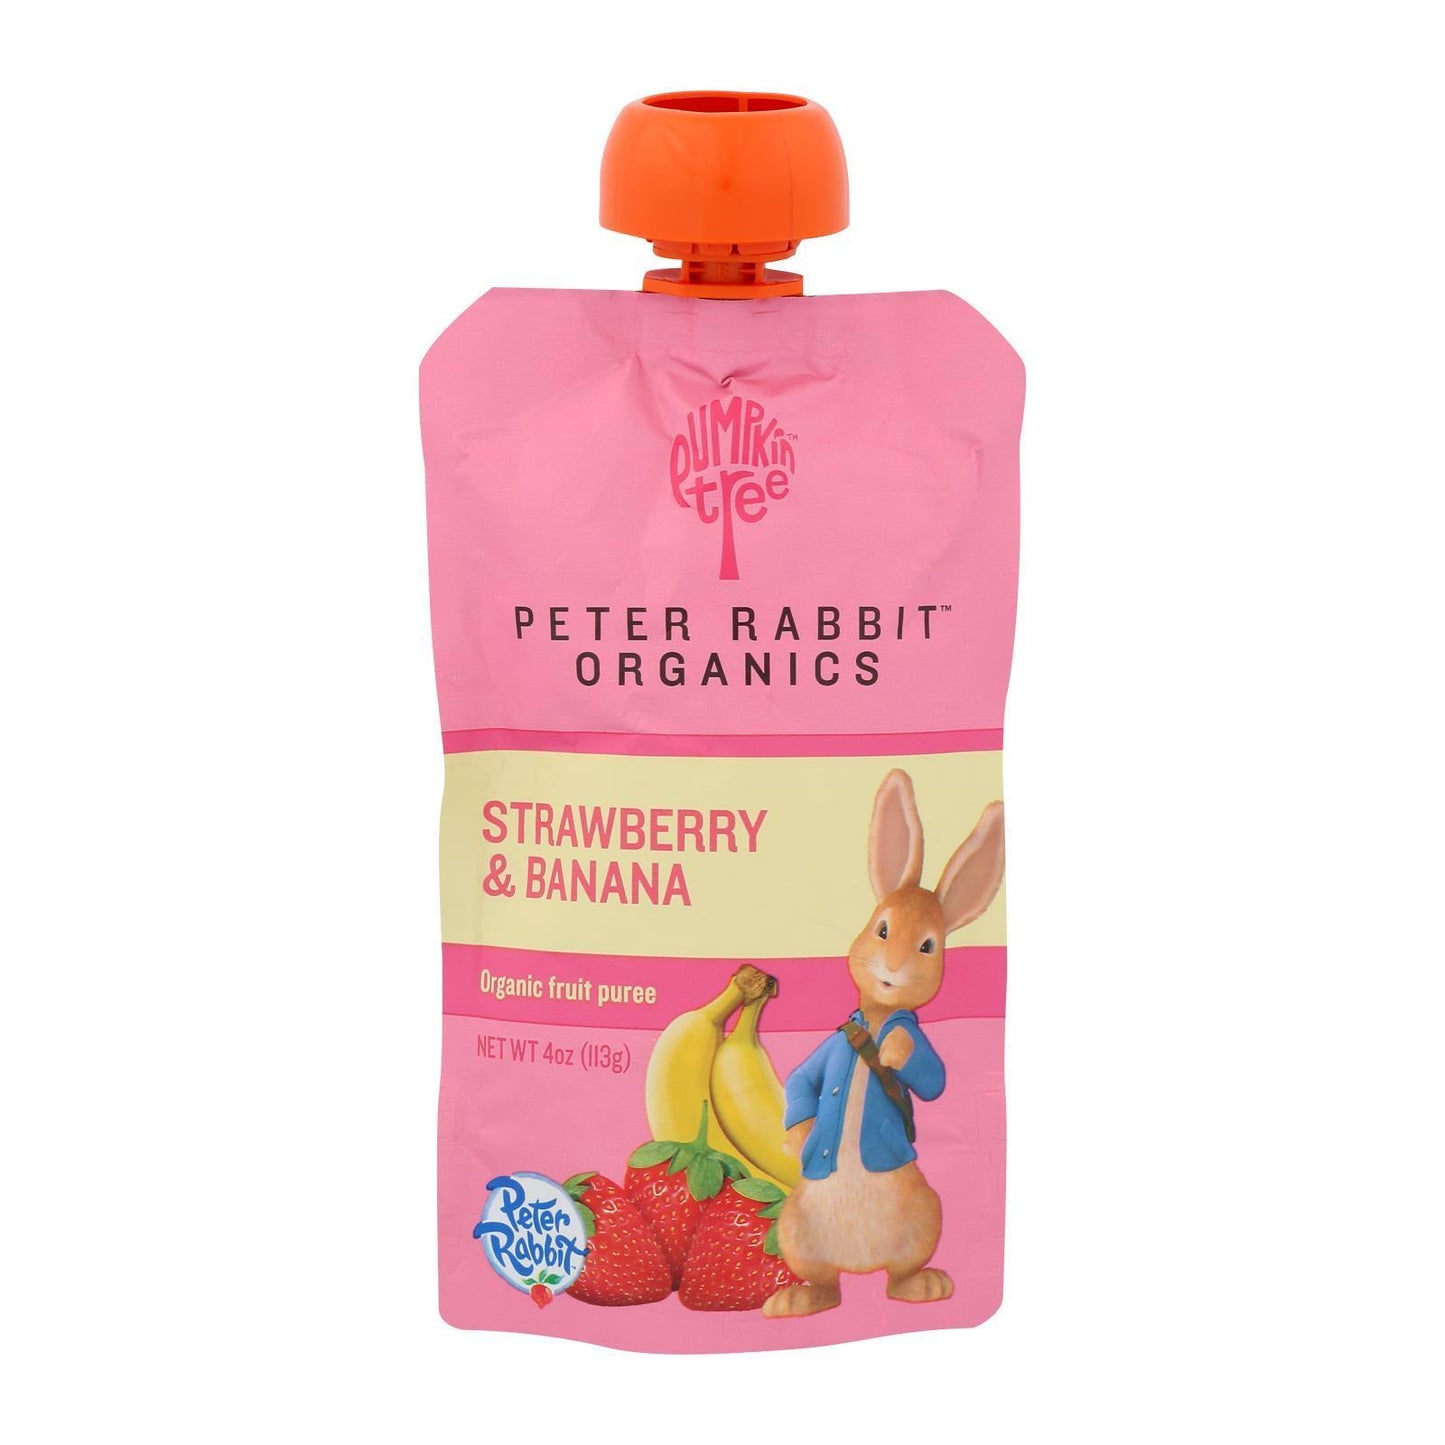 Peter Rabbit Organics - Strawberry & Banana Baby Pouch (4OZ)